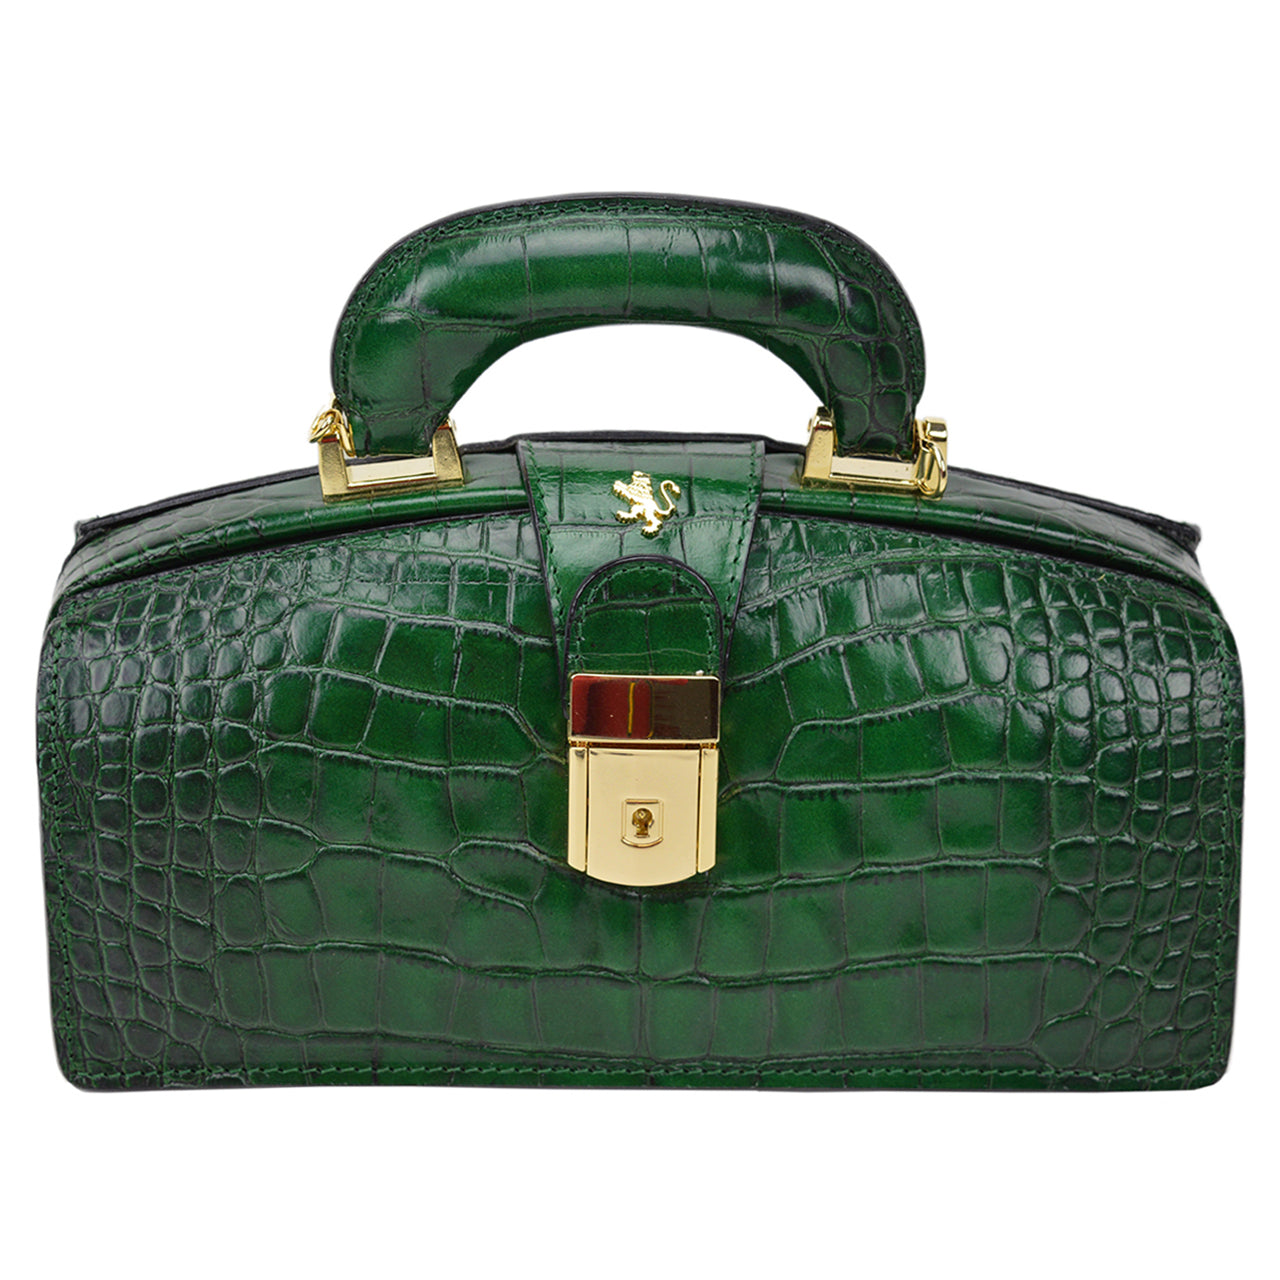 Pratesi Lady Brunelleschi King Woman Bag in genuine Italian leather - Lady Brunelleschi King Woman Bag Emerald